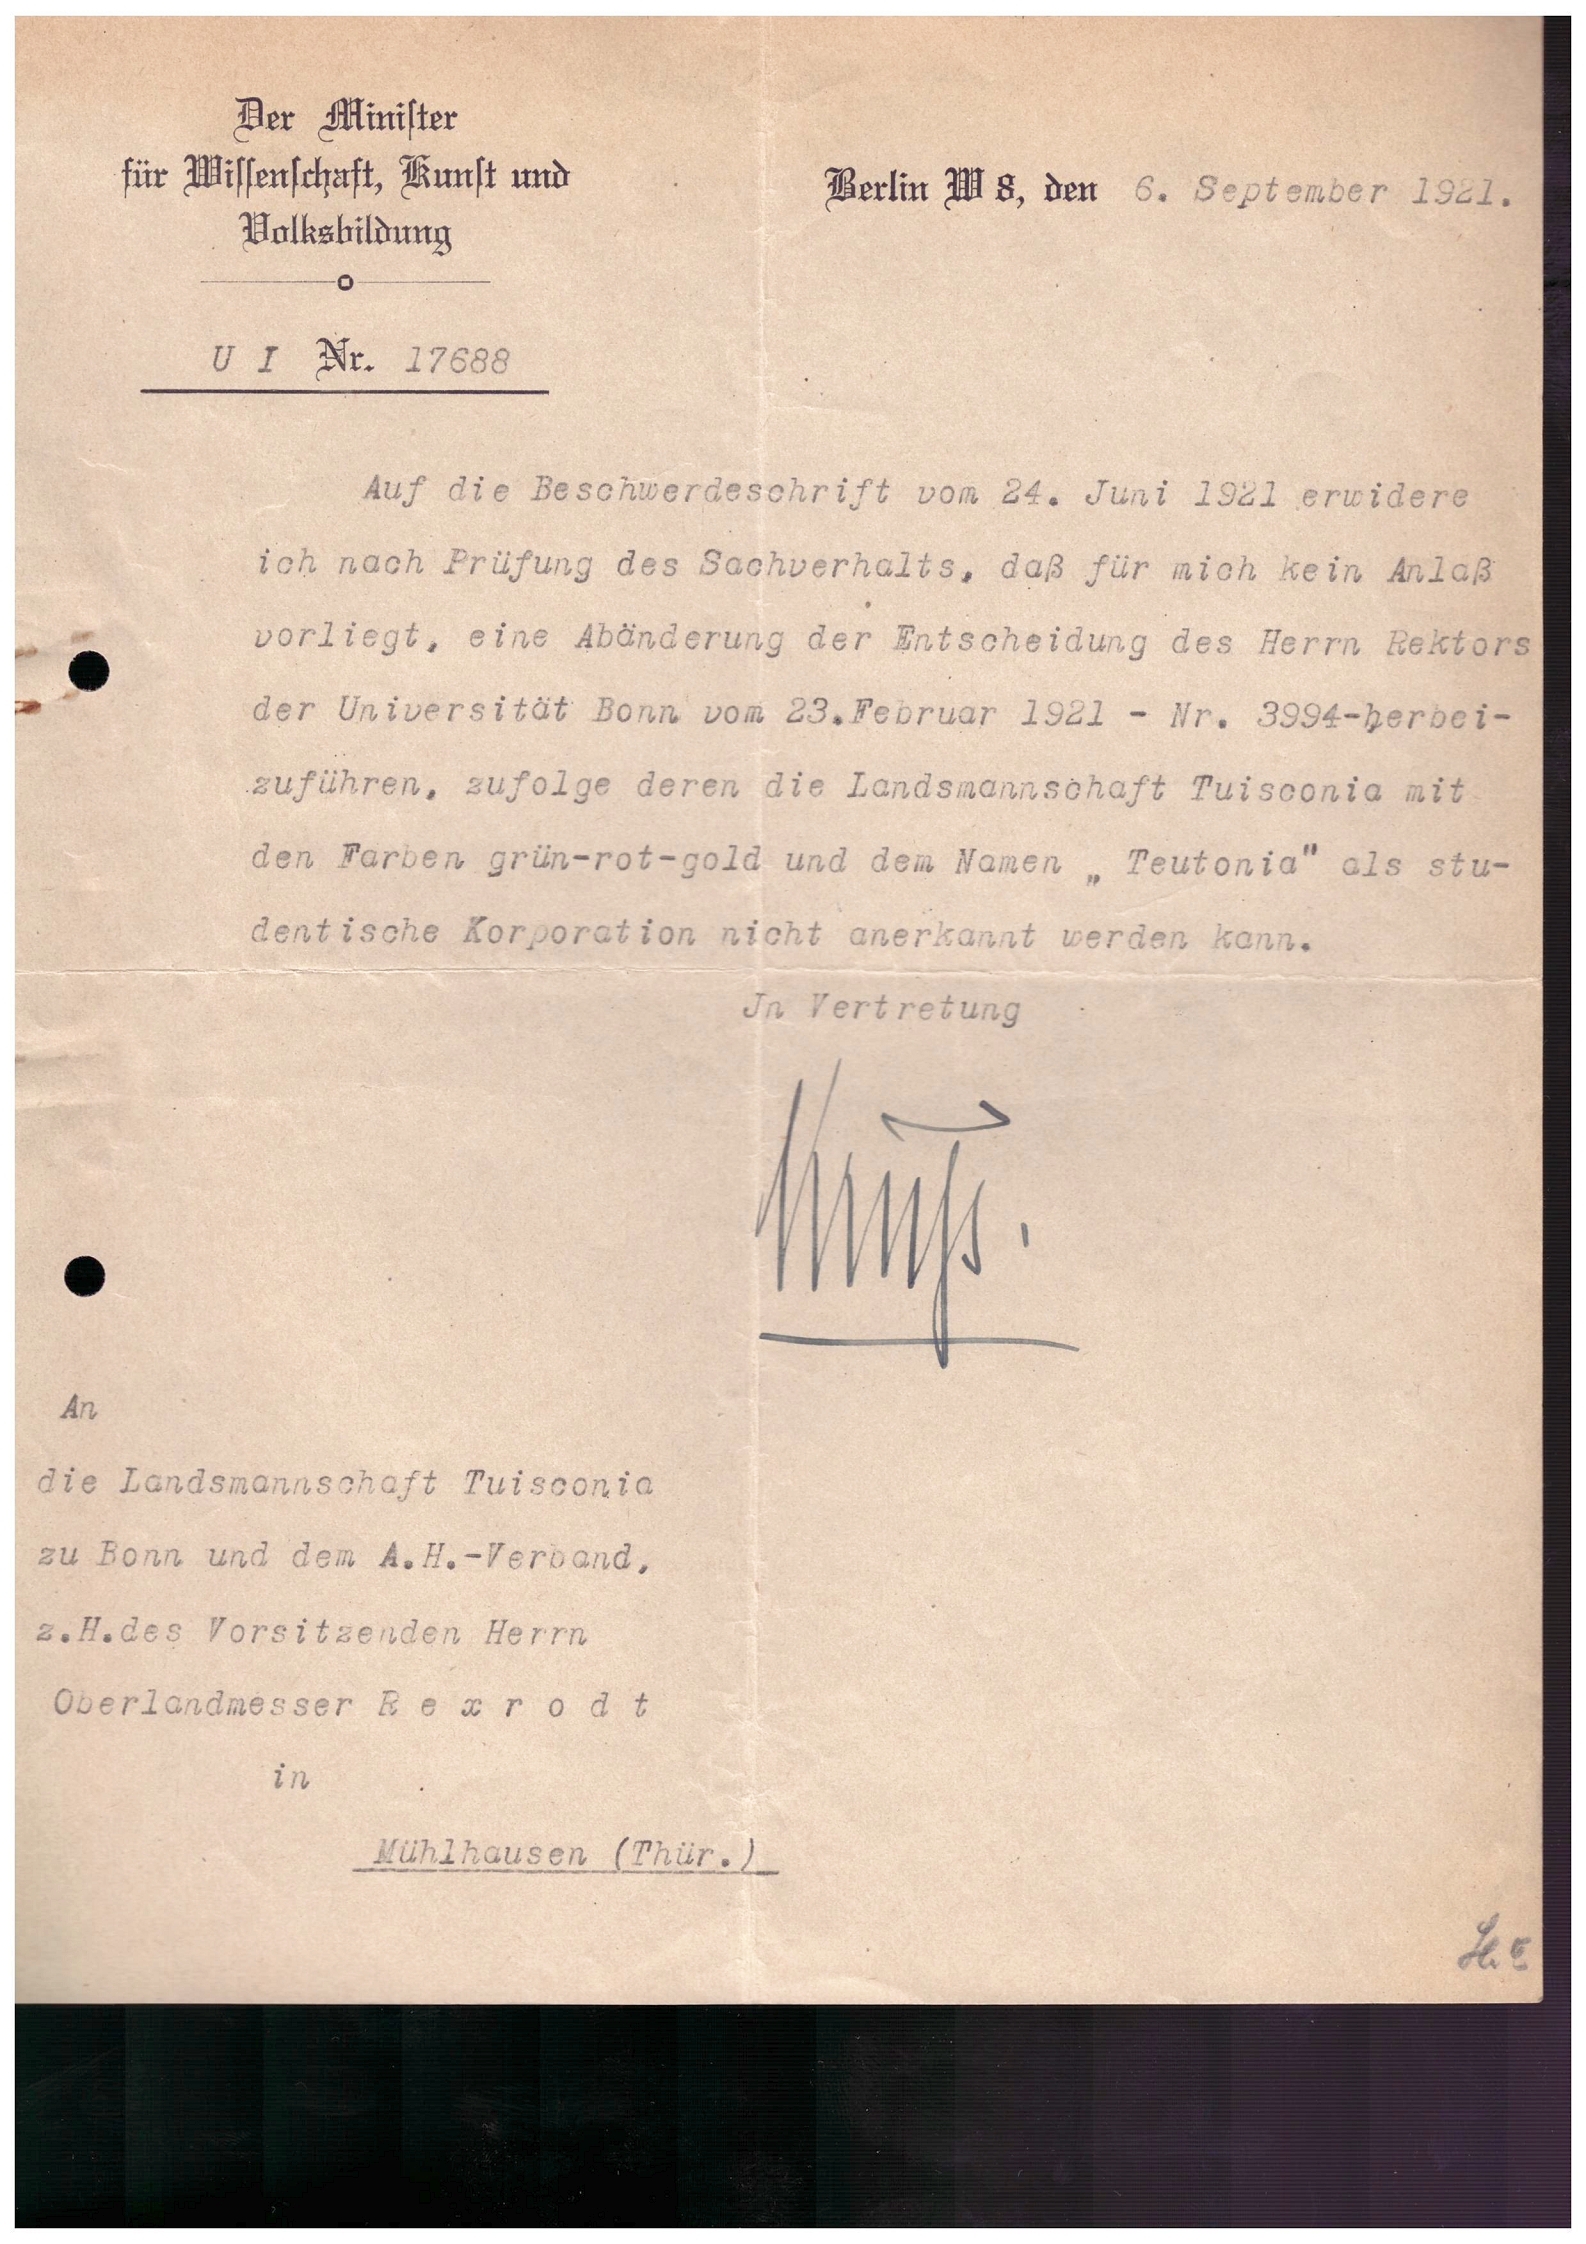 history/Dokumente/19210906_Der_Minister_fuer_Wissenschaft_BERLIN_an_L_Tuisconia.jpg